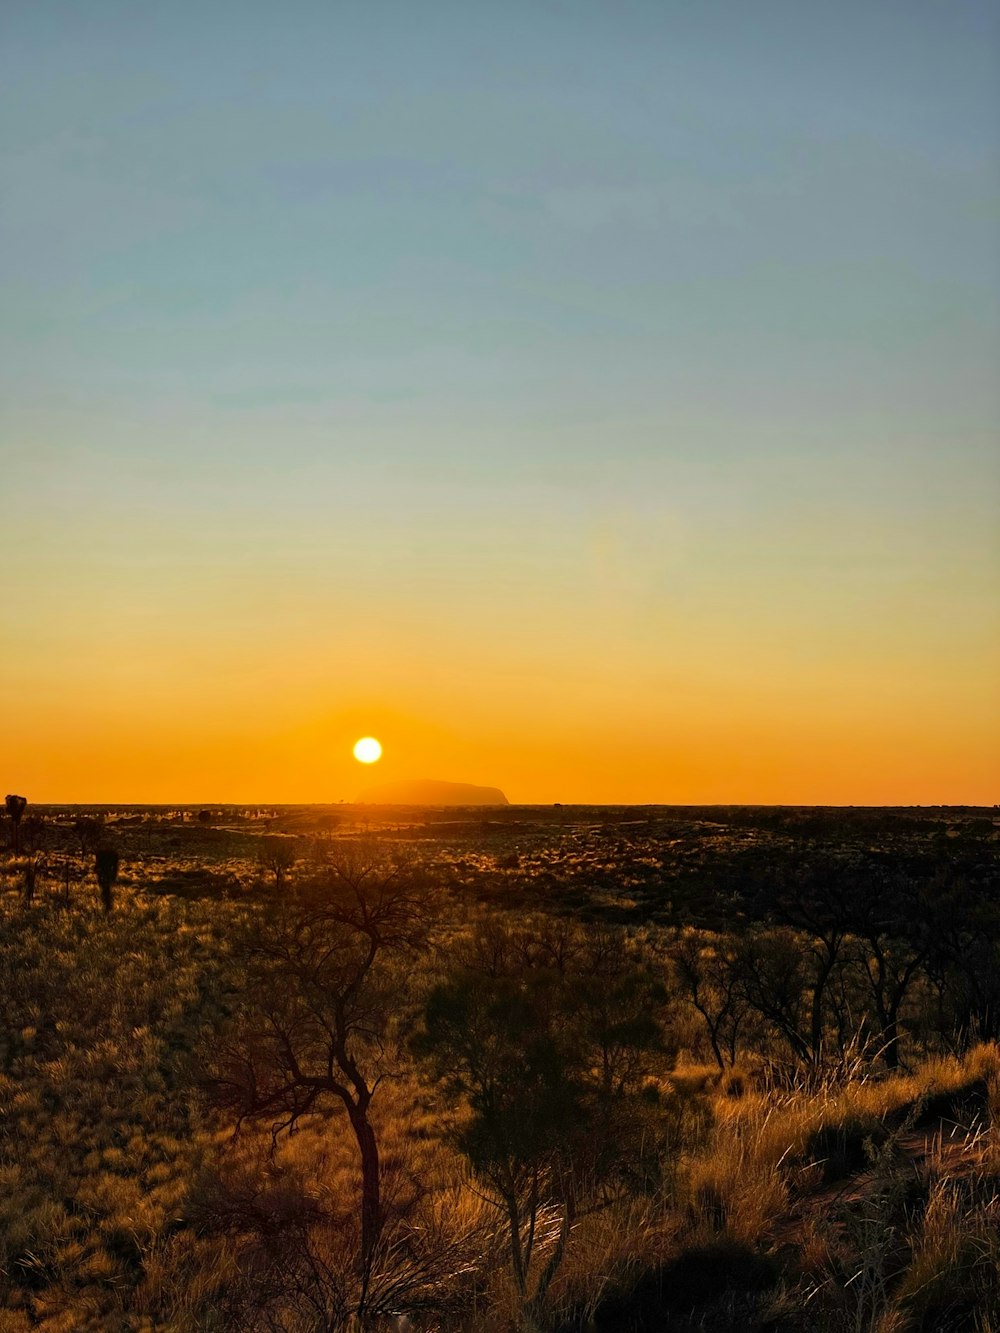 the sun is setting over a desert plain